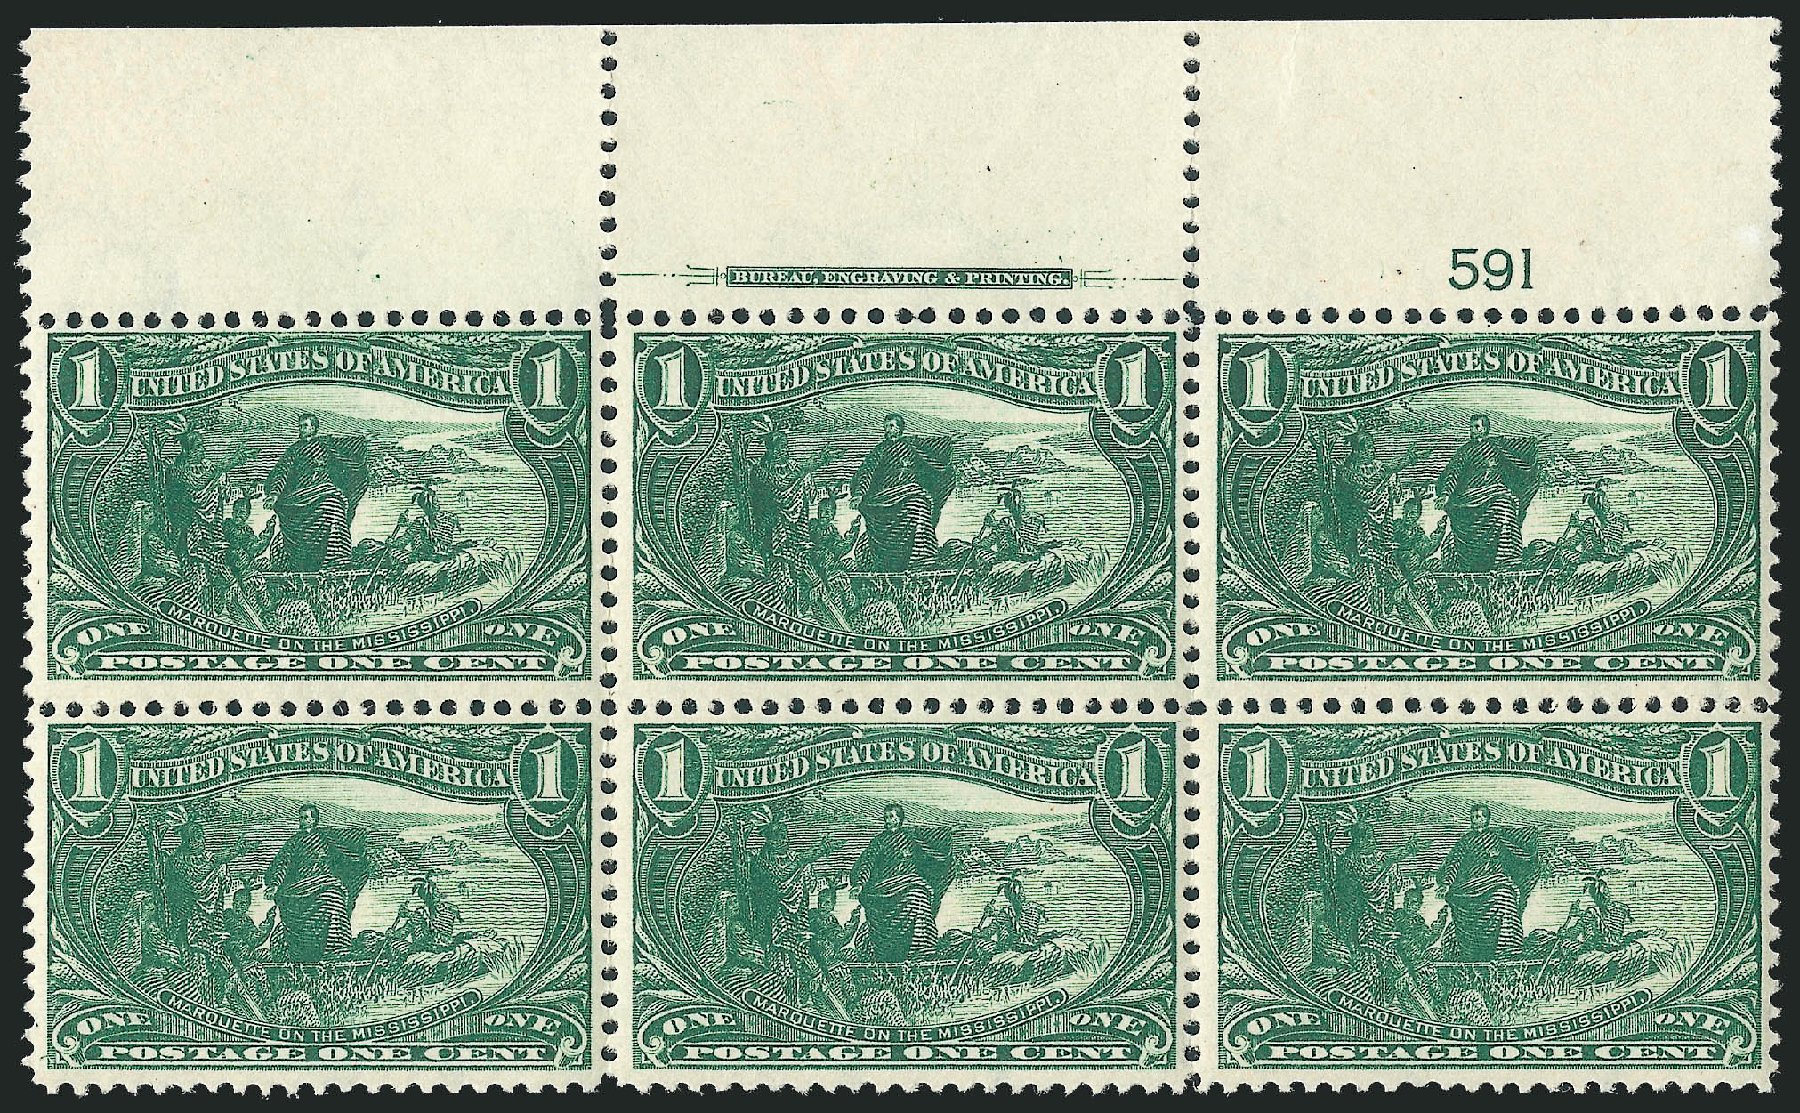 US Stamp Price Scott Catalog # 285: 1c 1898 Trans Mississippi Exposition